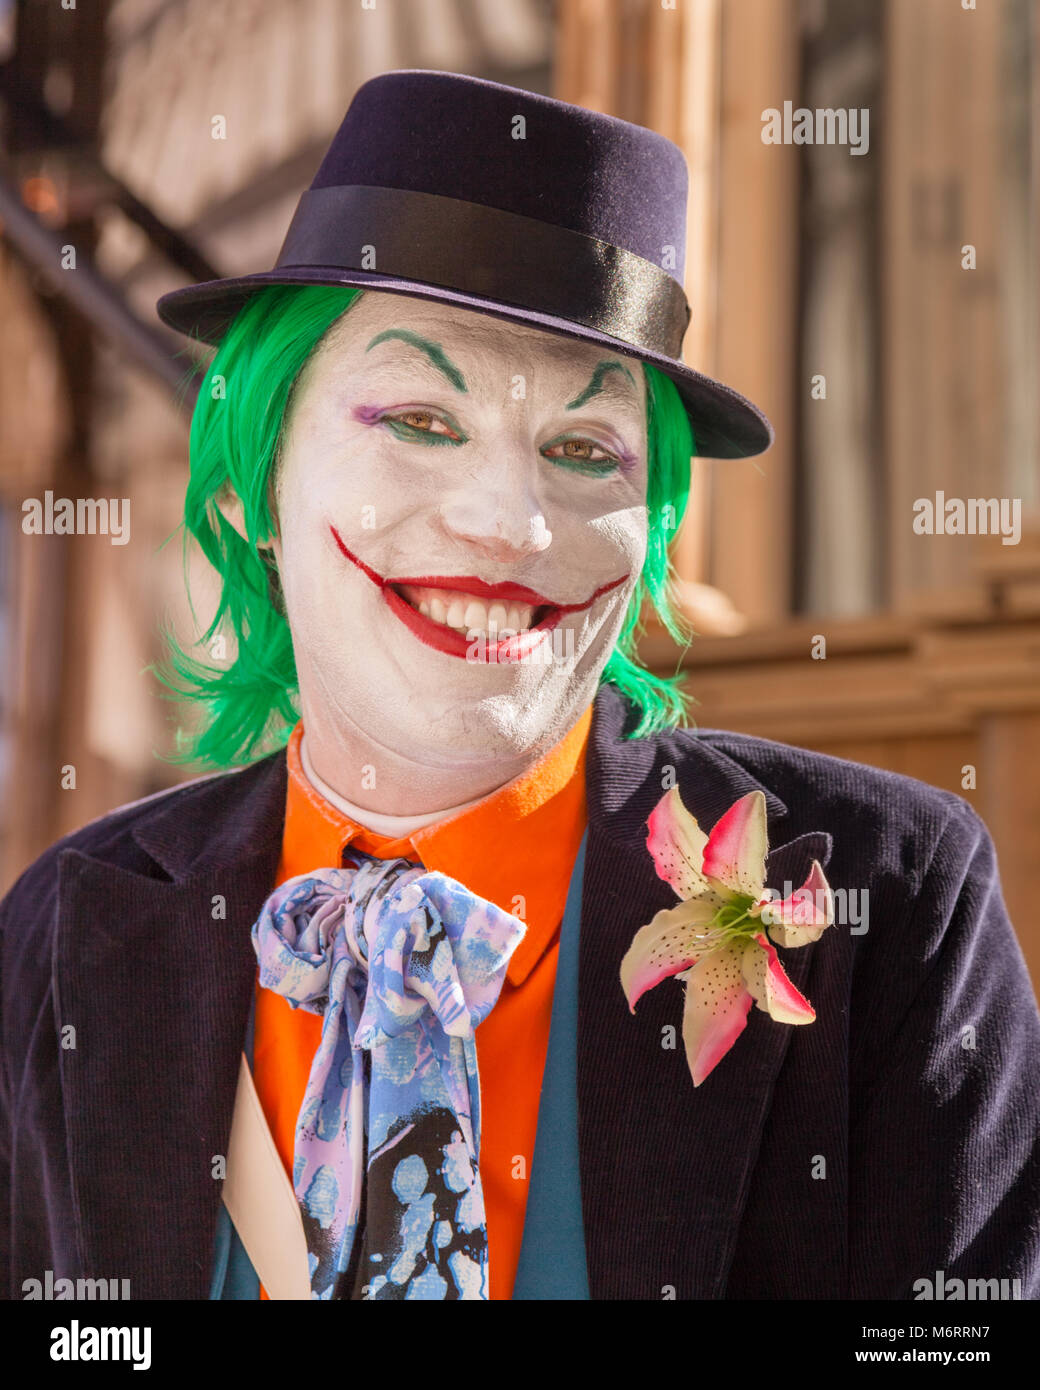 Clown face, participant in fancy dress costume as "The Joker" from Batman,  smiles at the Venice Carnival, Carnivale di Venezia, Veneto, Italy Stock  Photo - Alamy